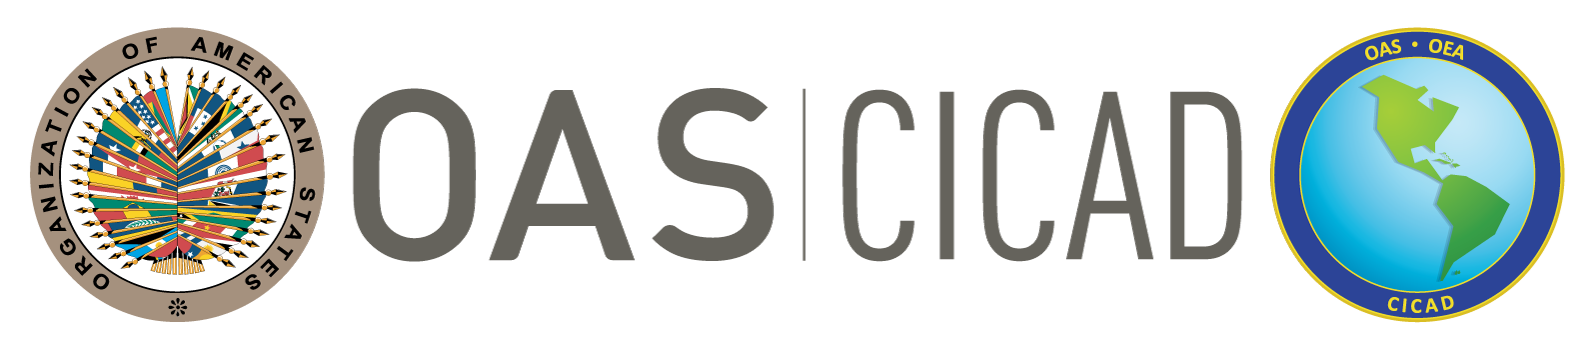 CICAD logo